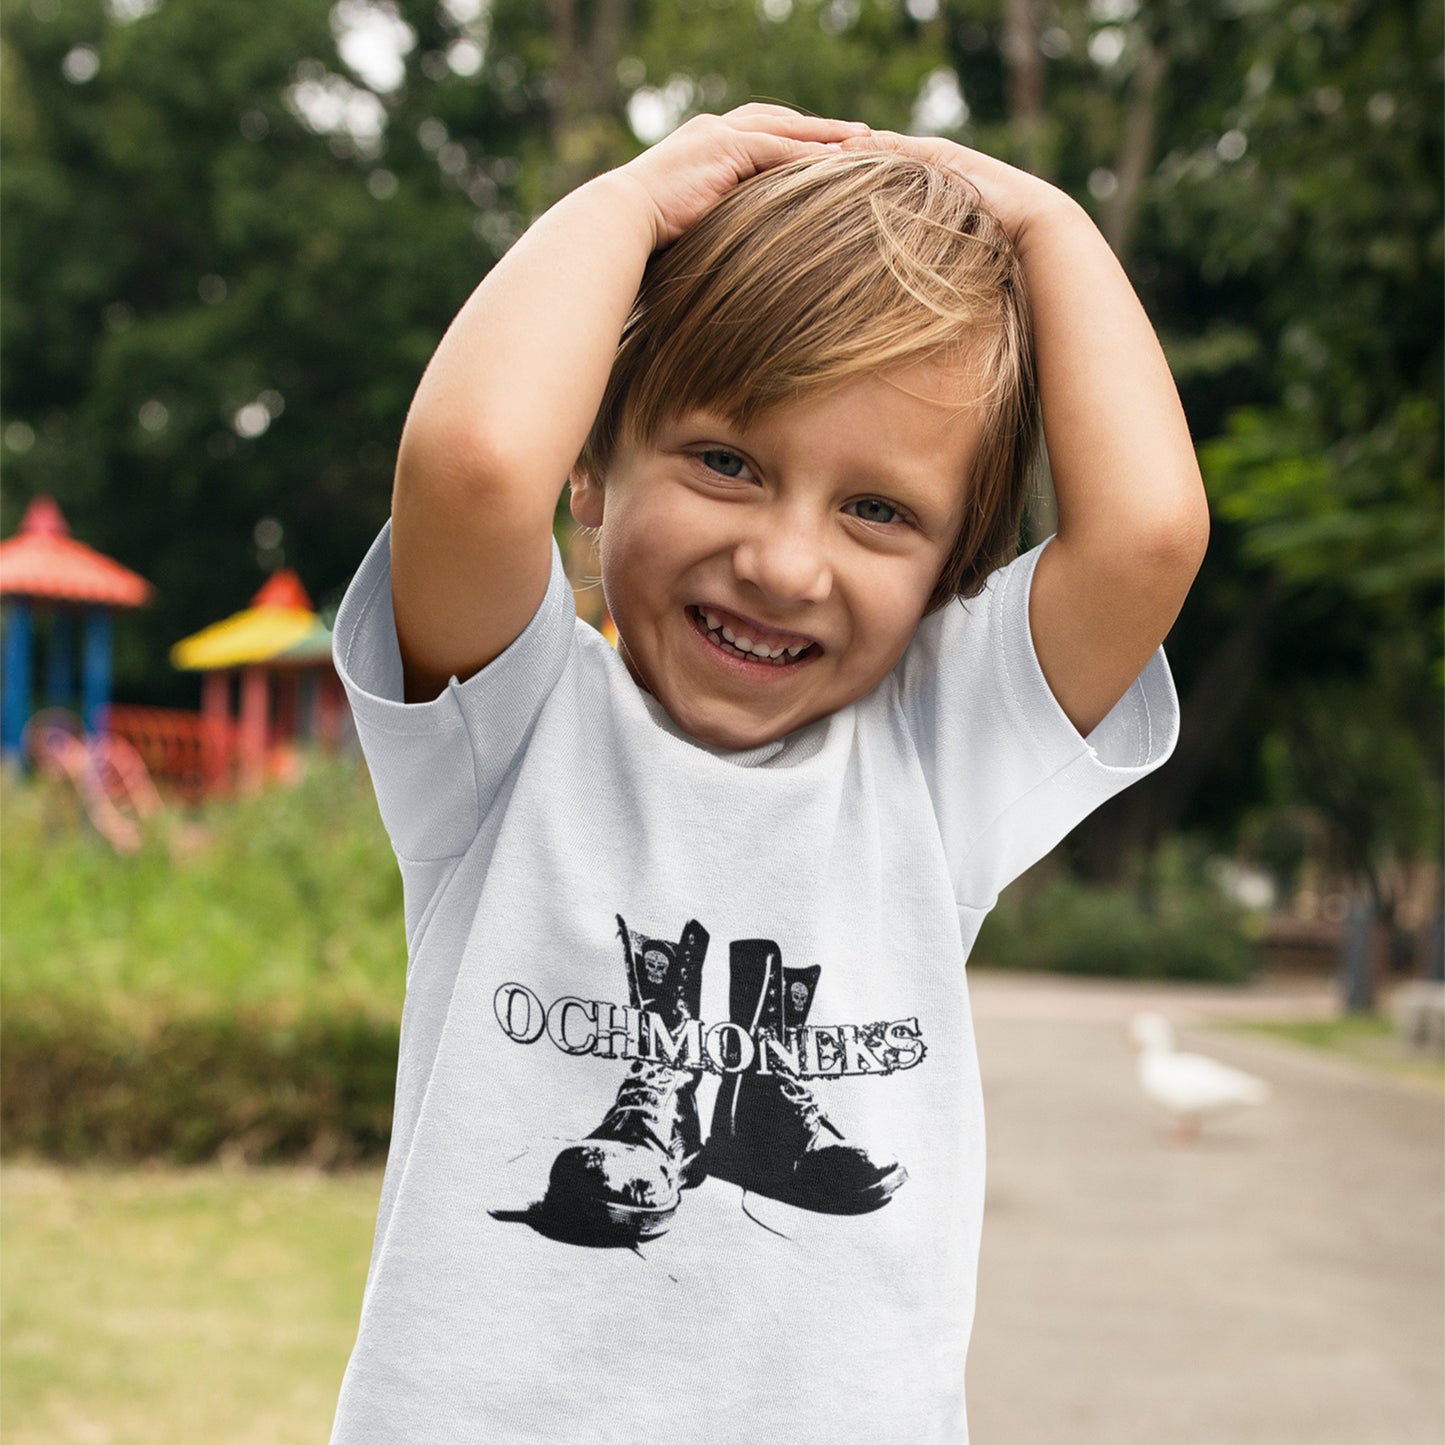 Kids T-Shirt "OCHMONEKS BOOTS"